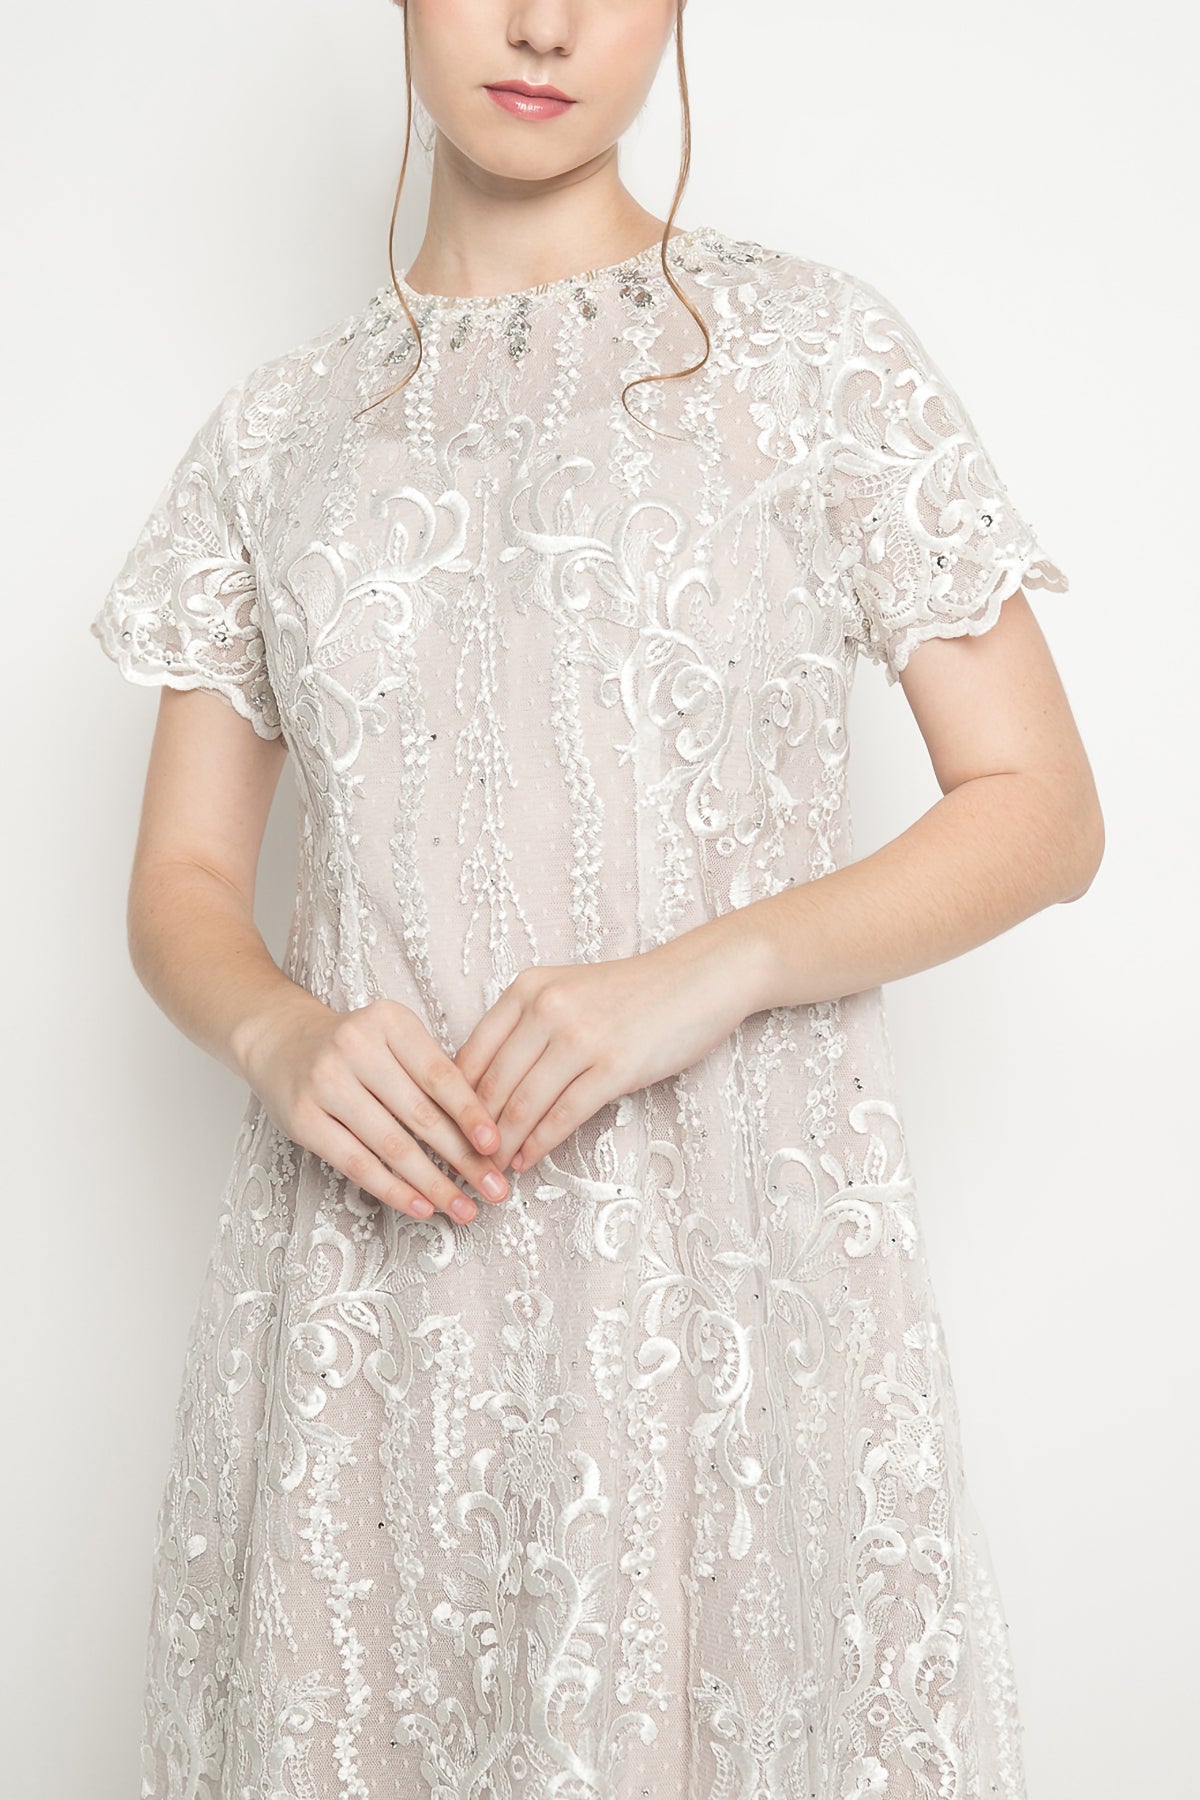 Ailea Dress in White